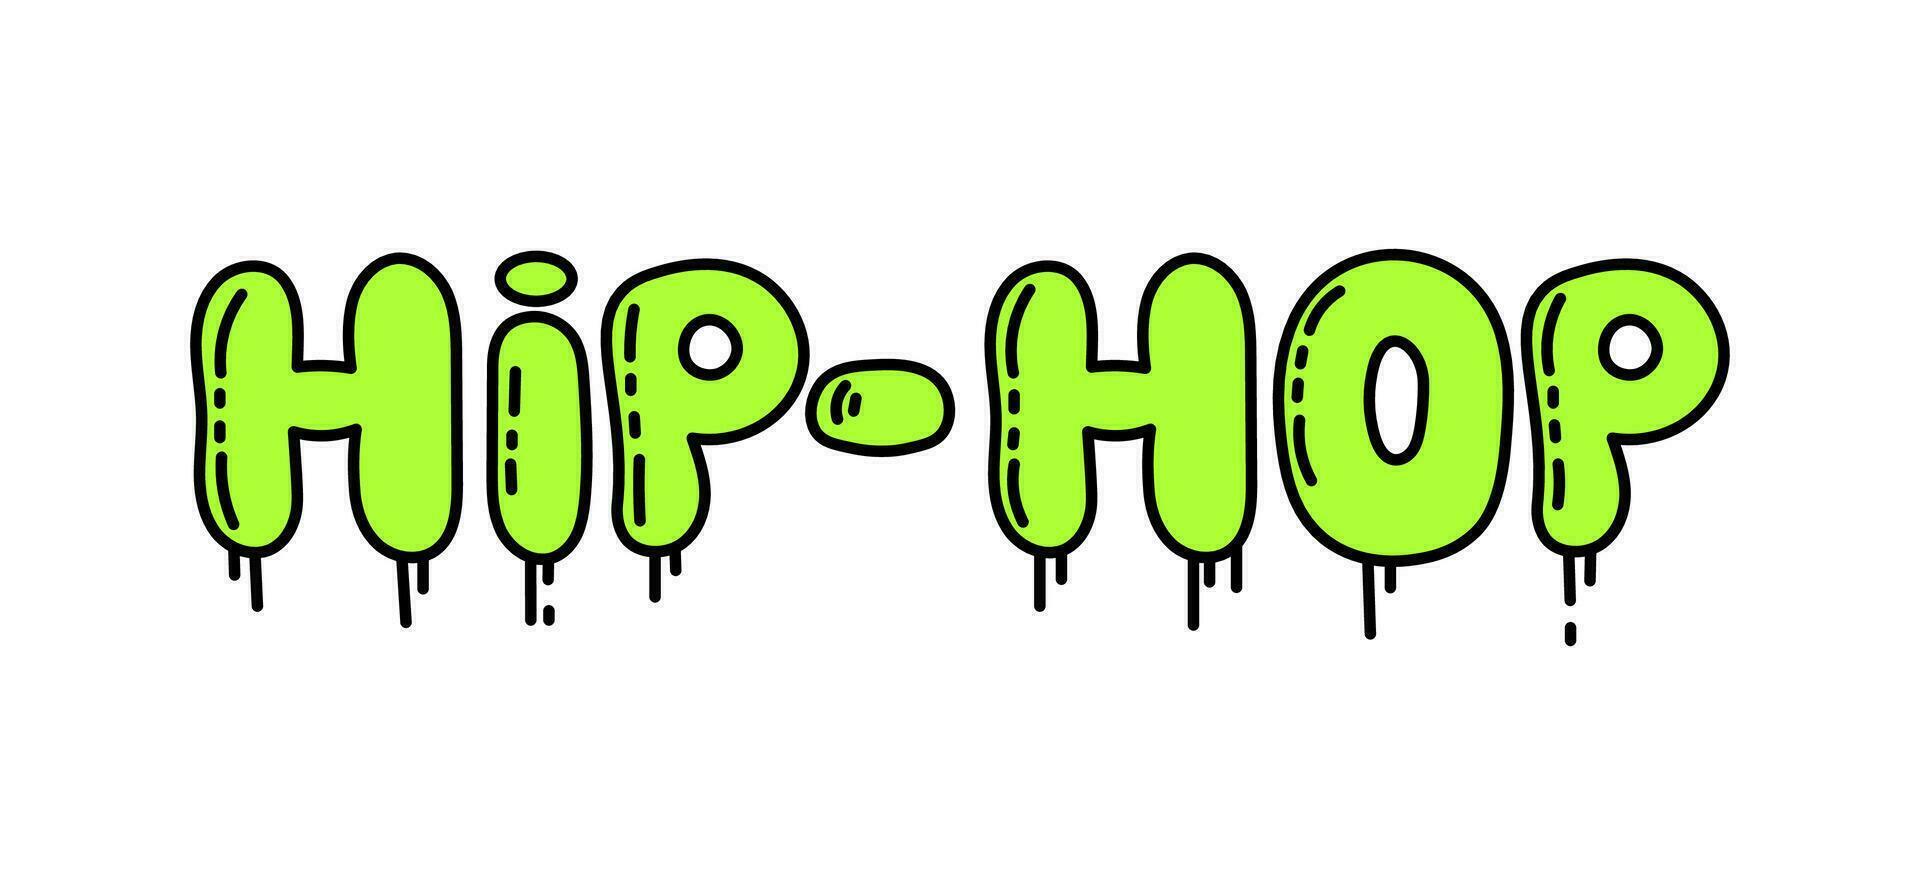 Hip-hop graffiti inscription with drips vector